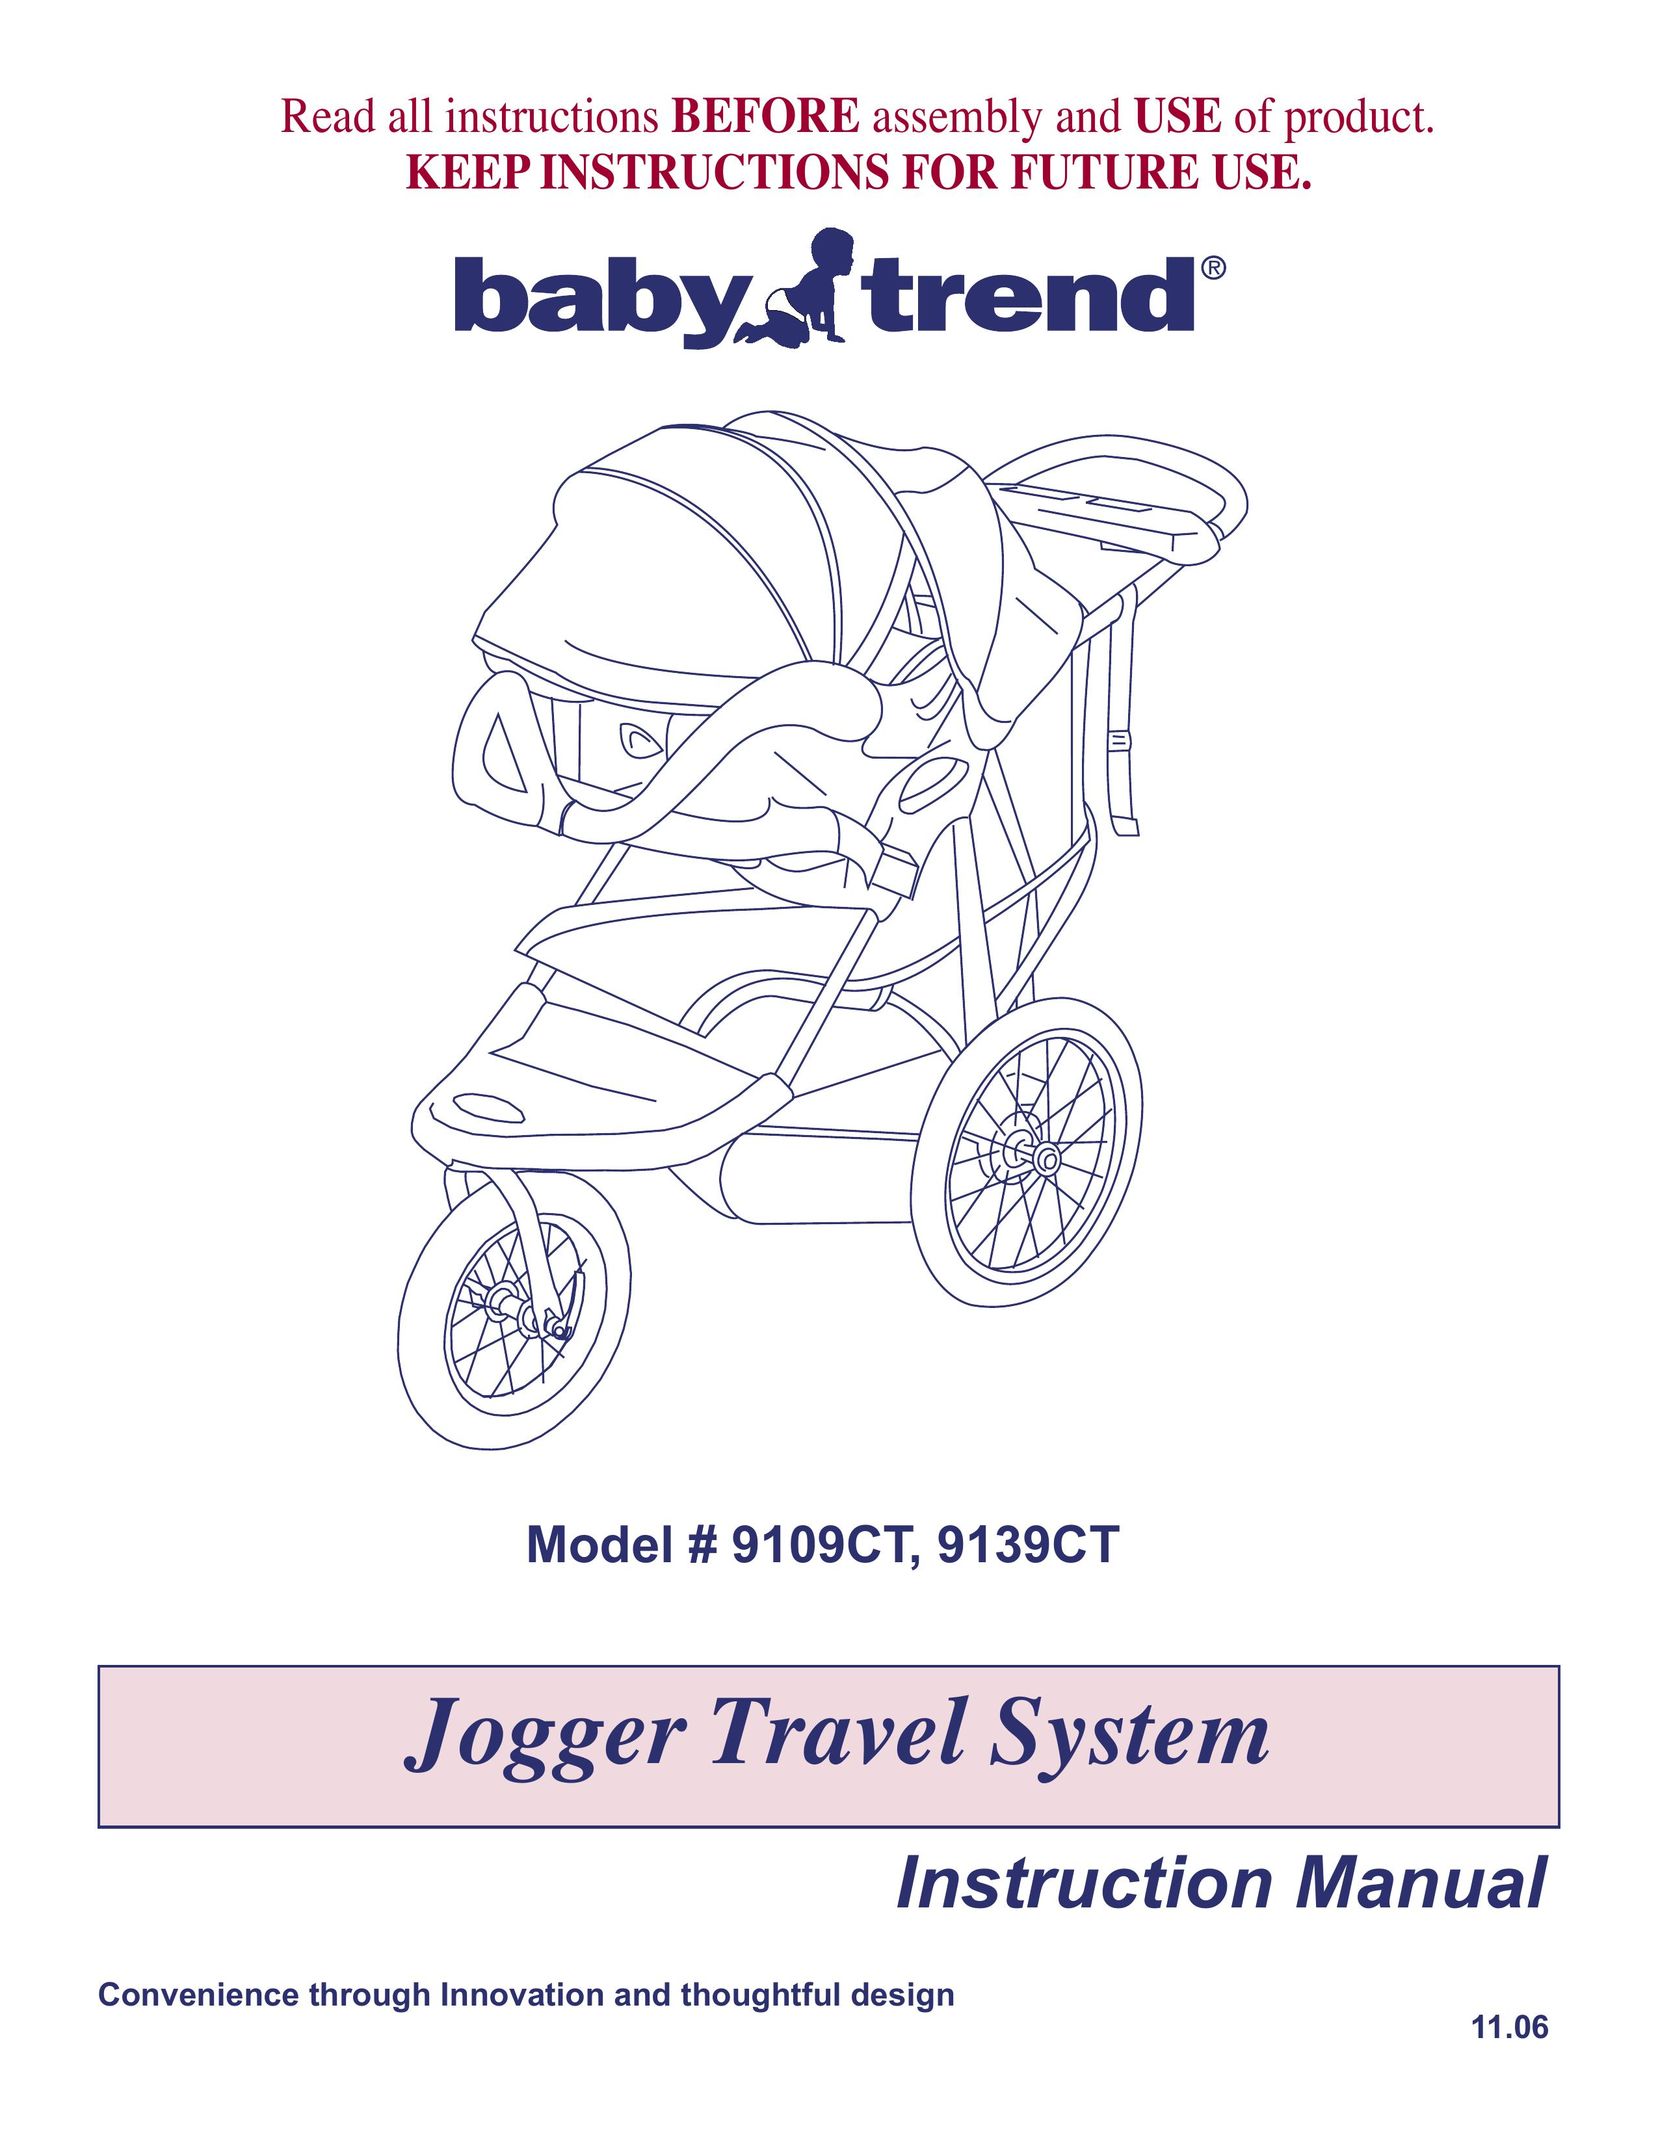 Baby Trend 9139CT Stroller User Manual